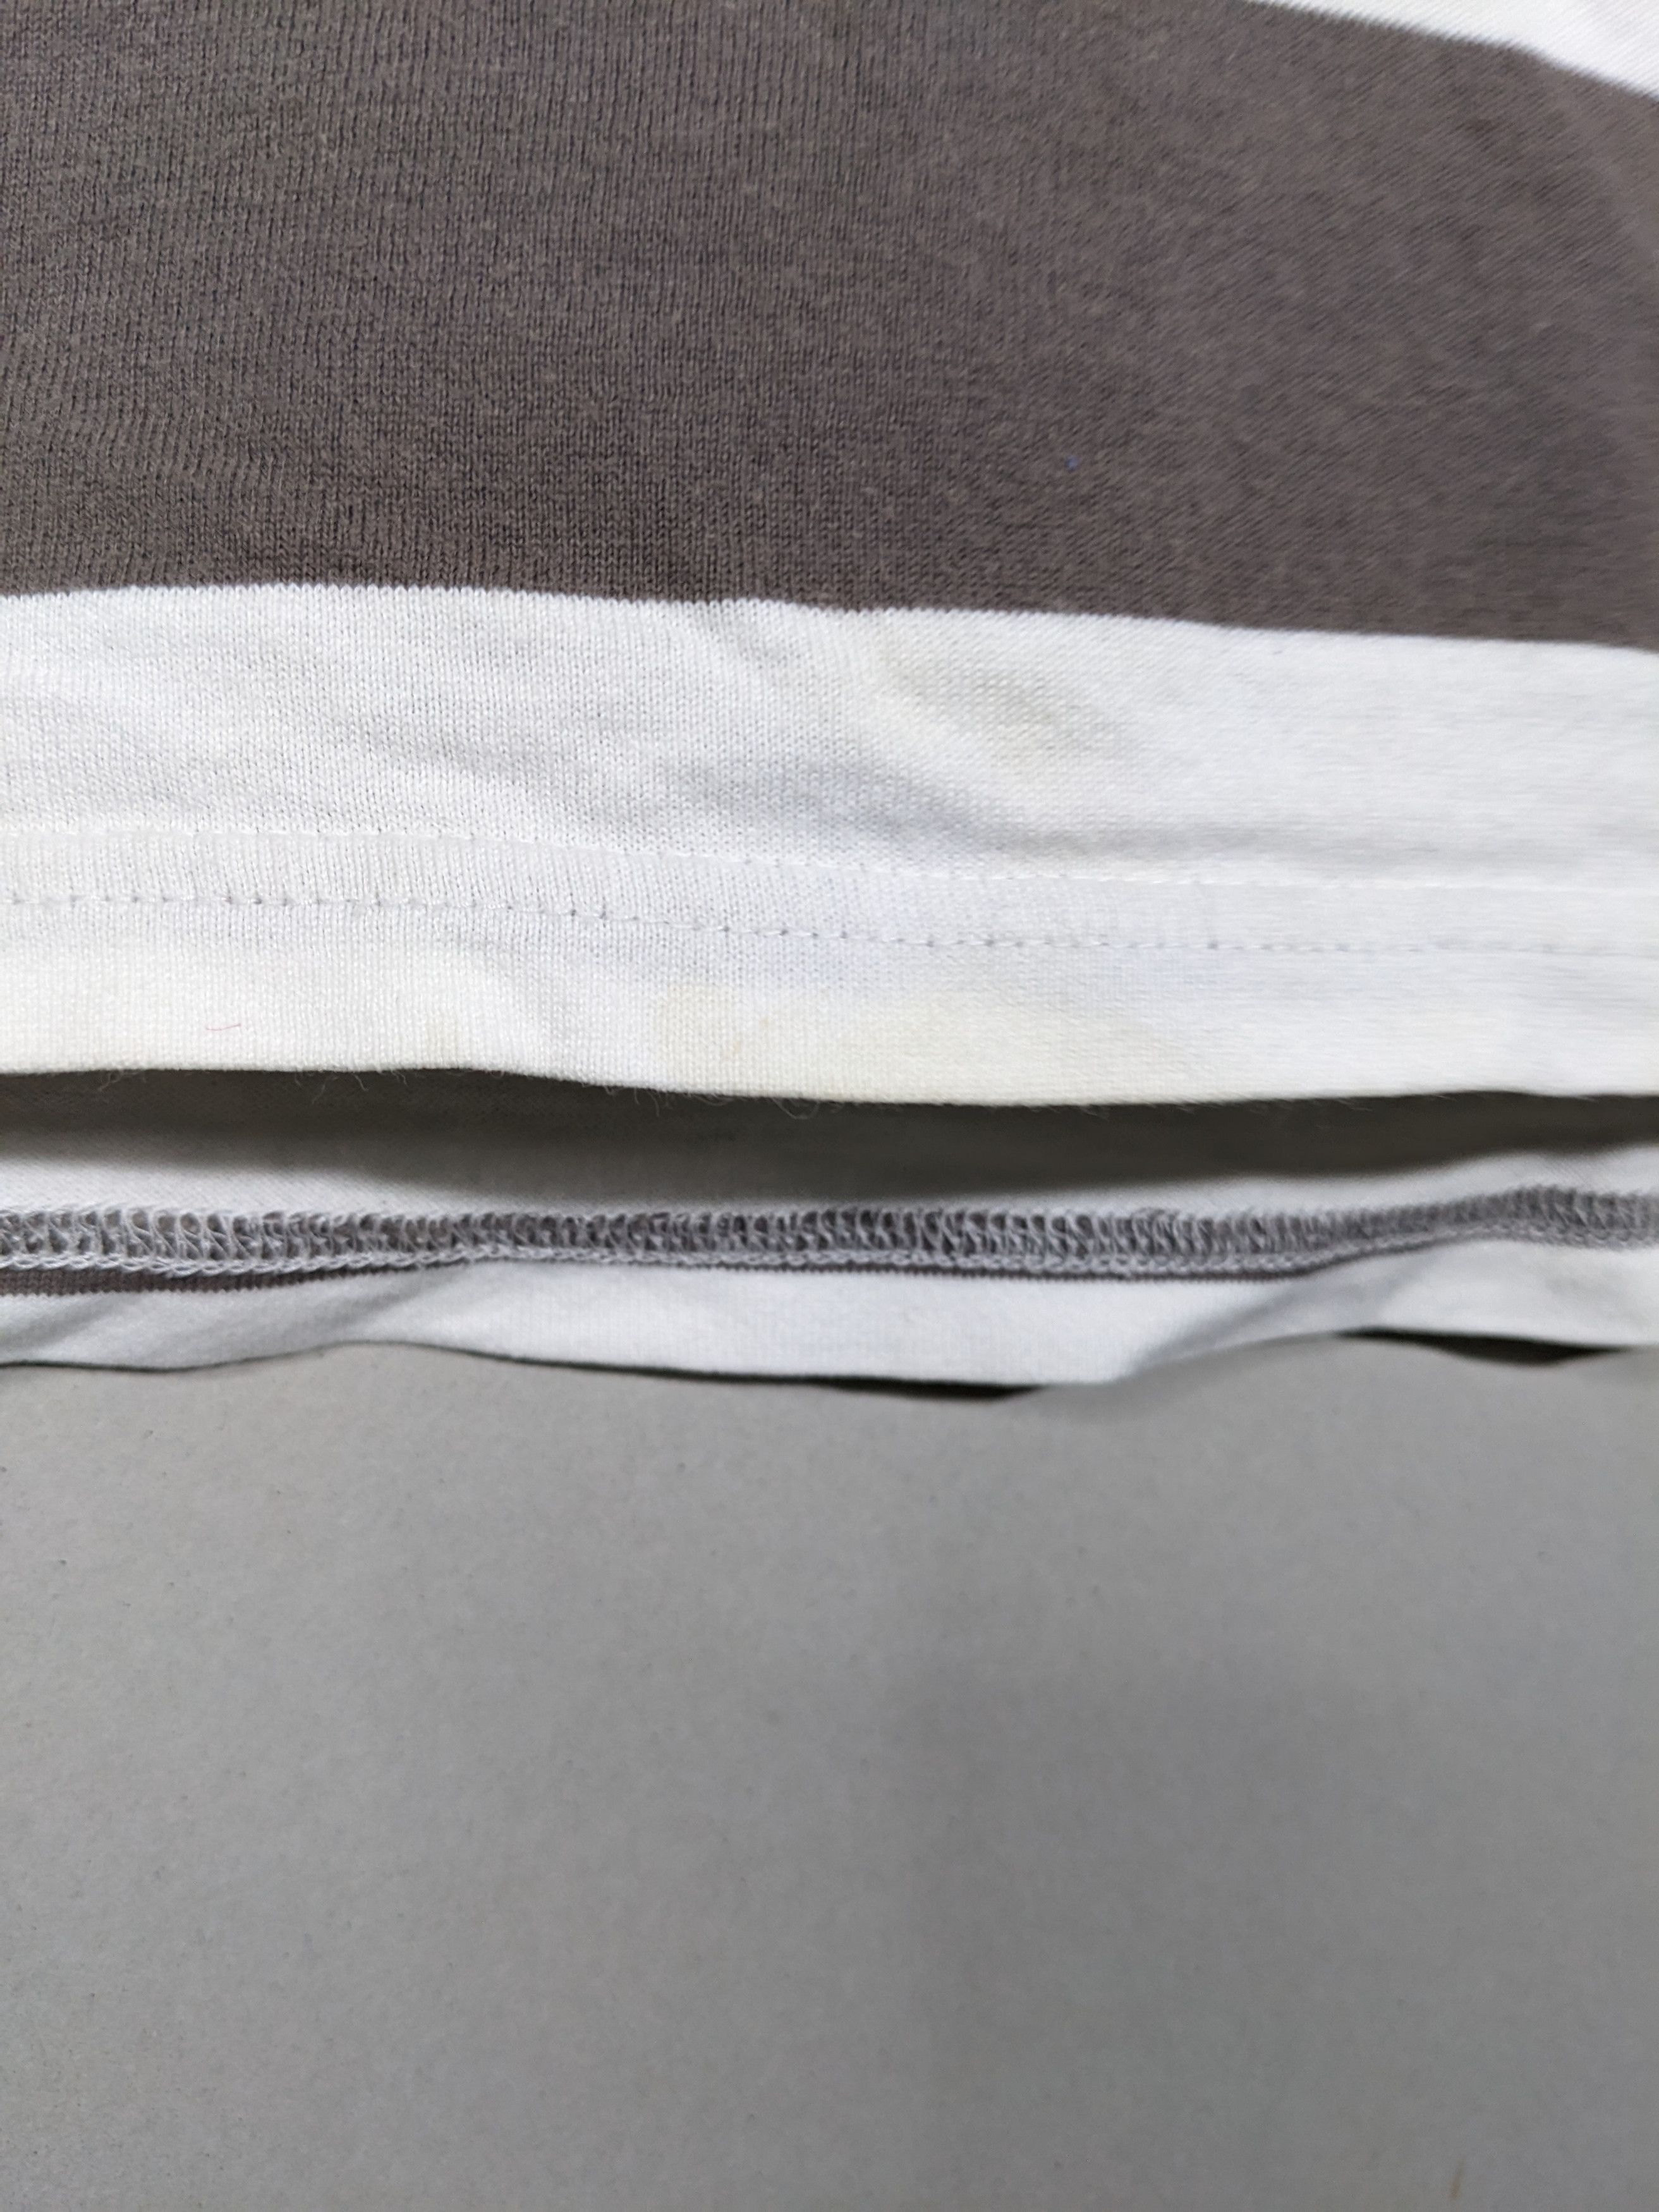 Number Nine Striped Gray White Pocket T-Shirt - 9